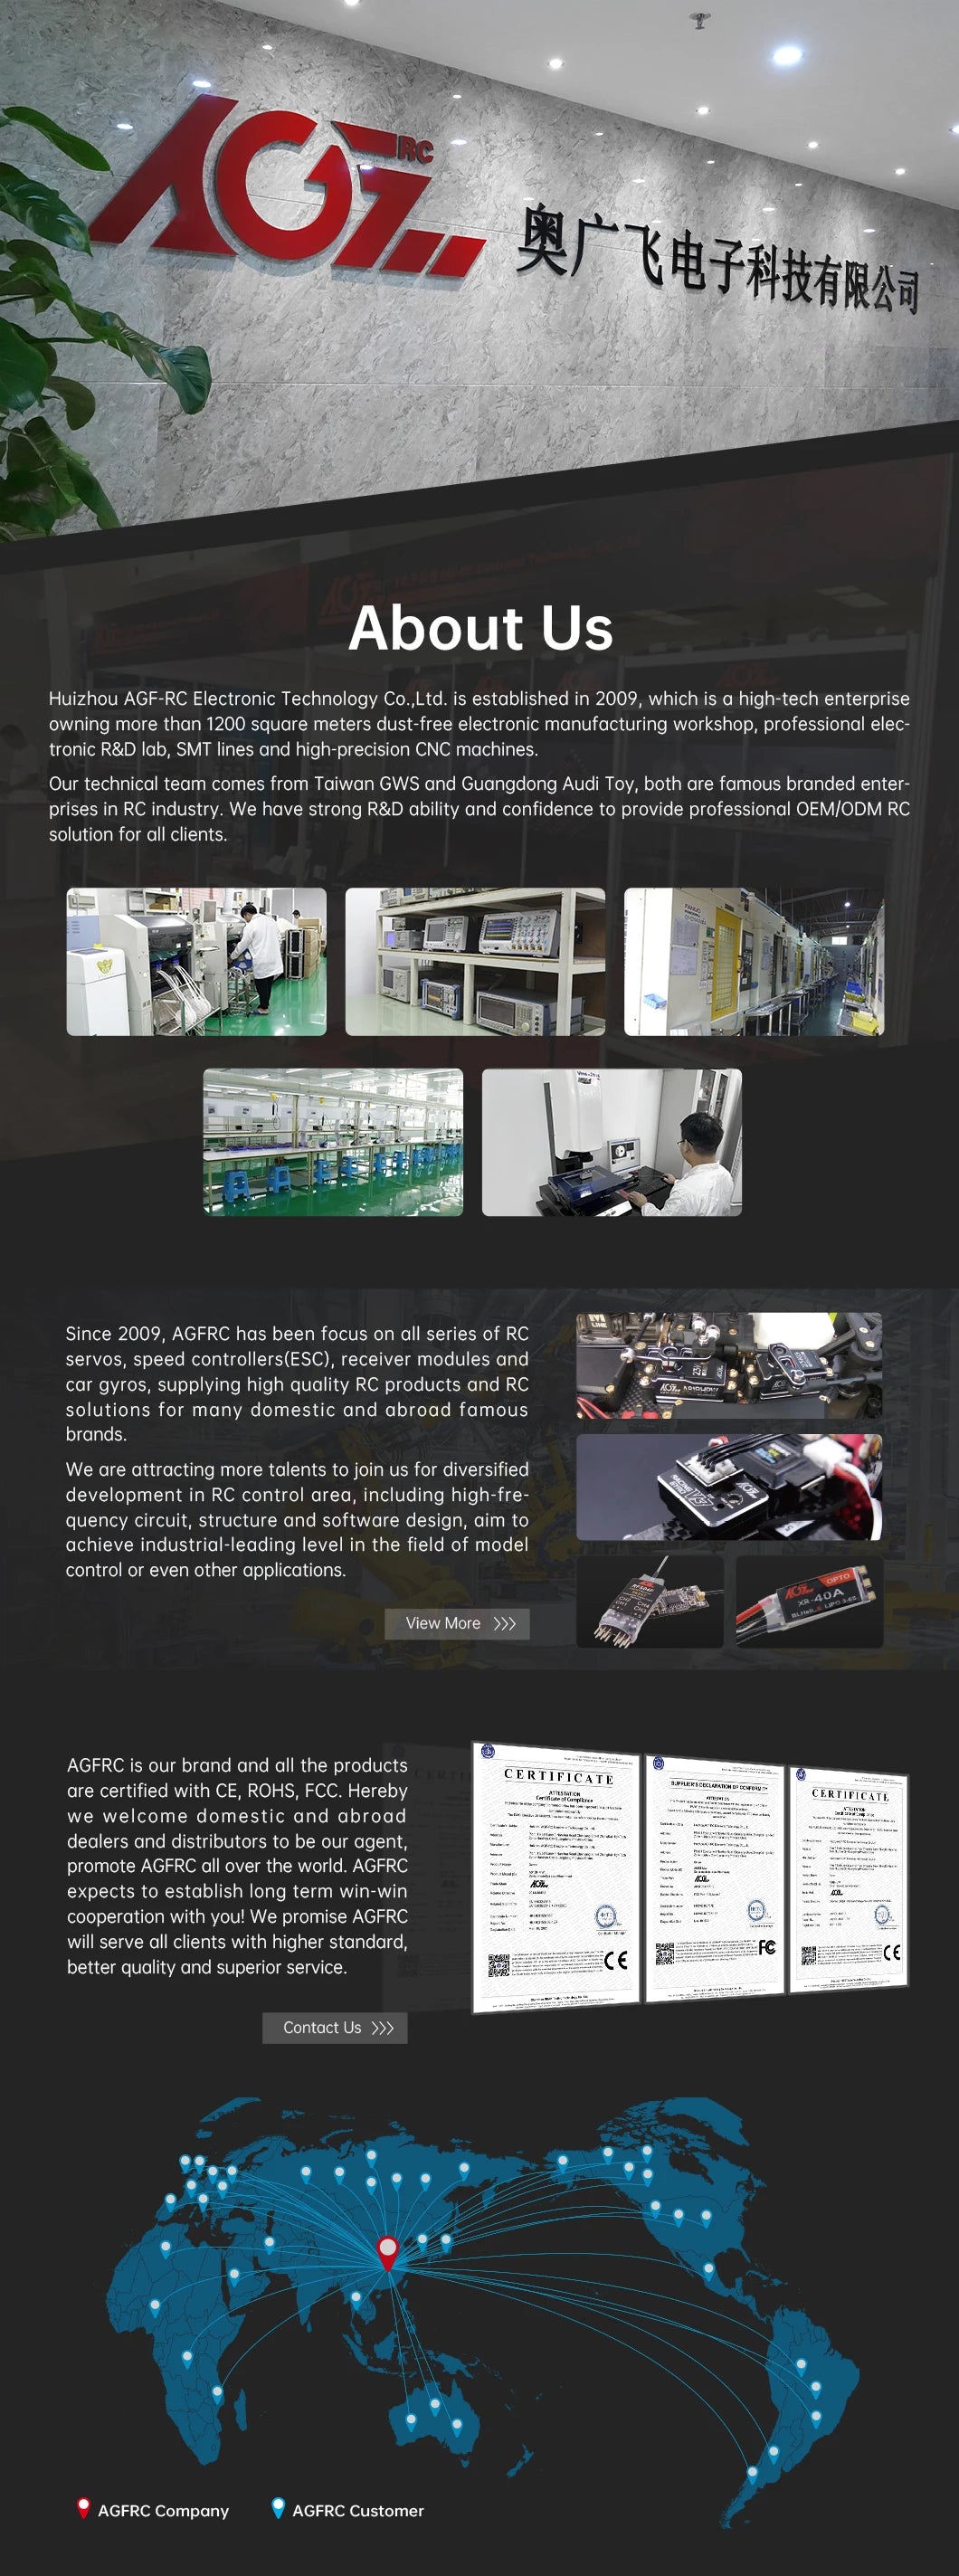 AGFRC A06CLS V2, Huizhou AGF-RC Electronic Technology Co-,Ltd. is a